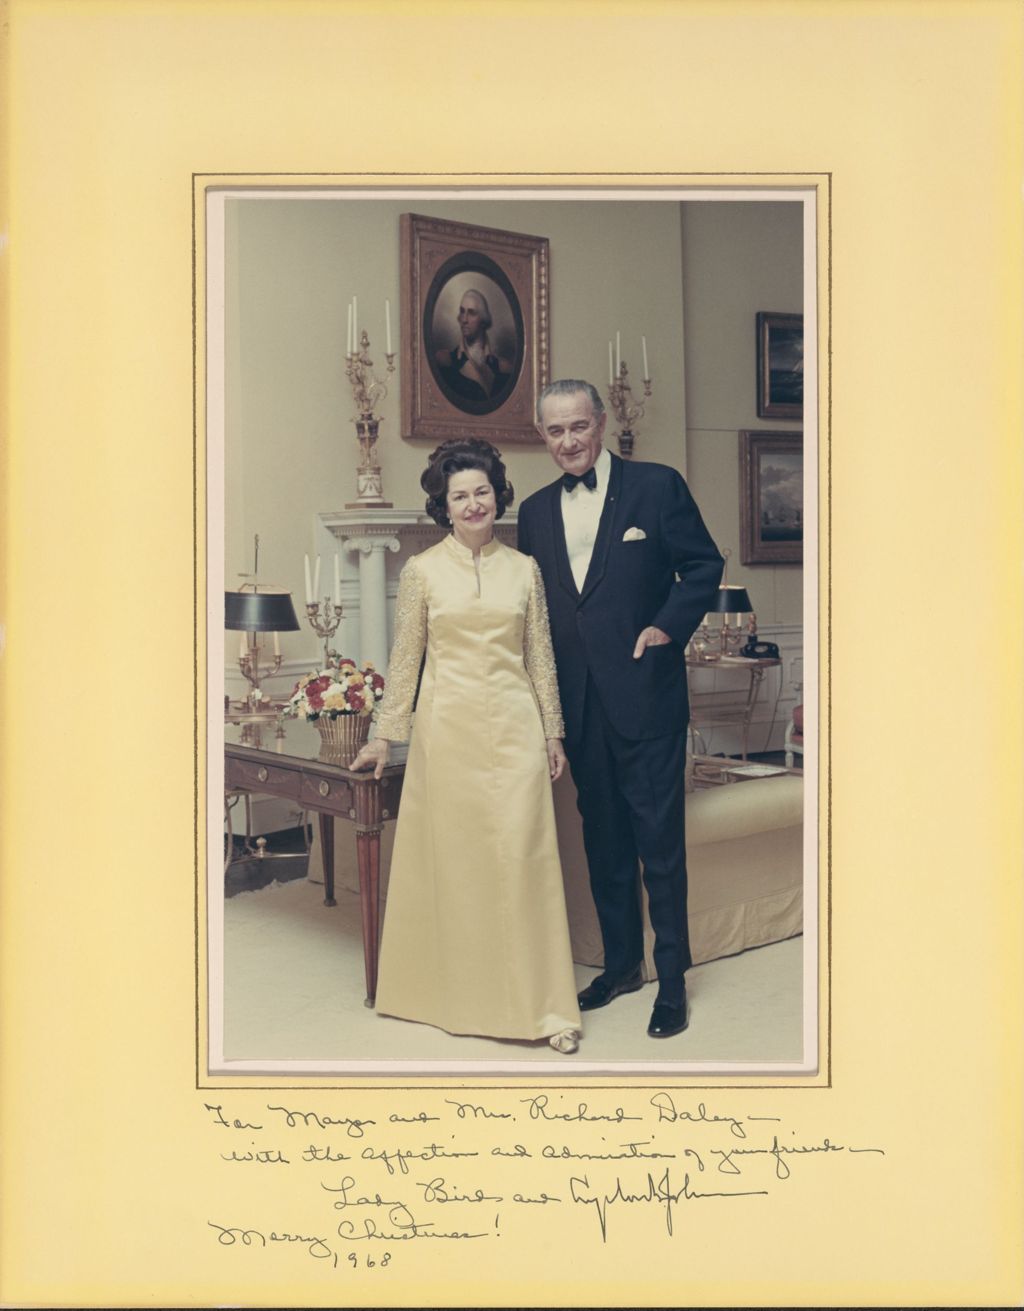 Miniature of Lady Bird and Lyndon B. Johnson